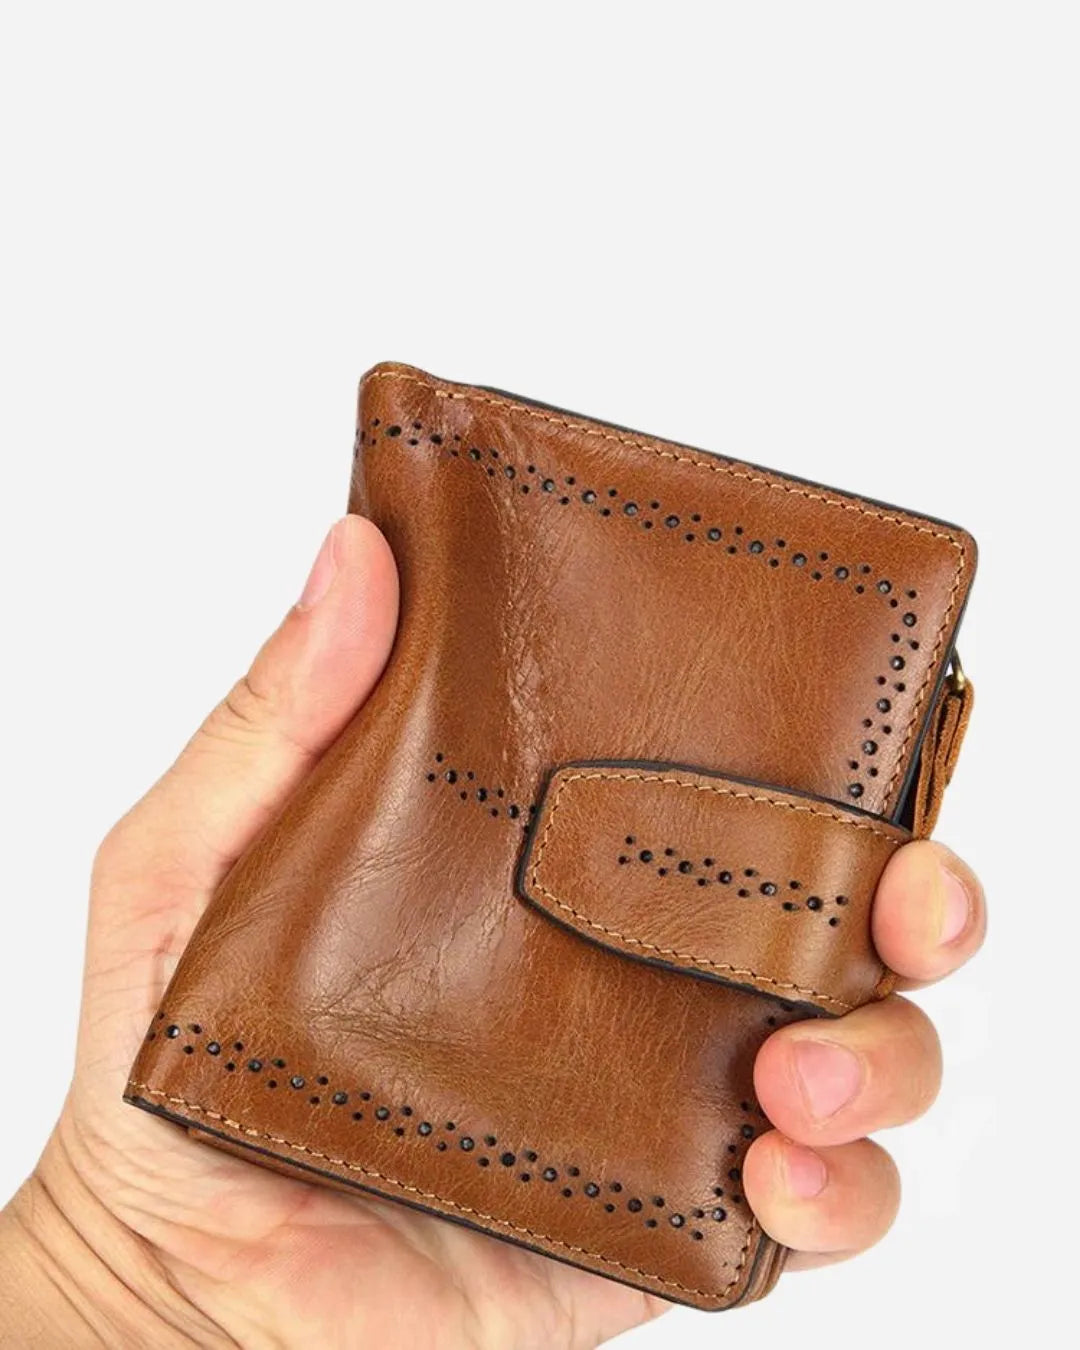 Hand showcasing RFID Blocking Leather Wallet in brown